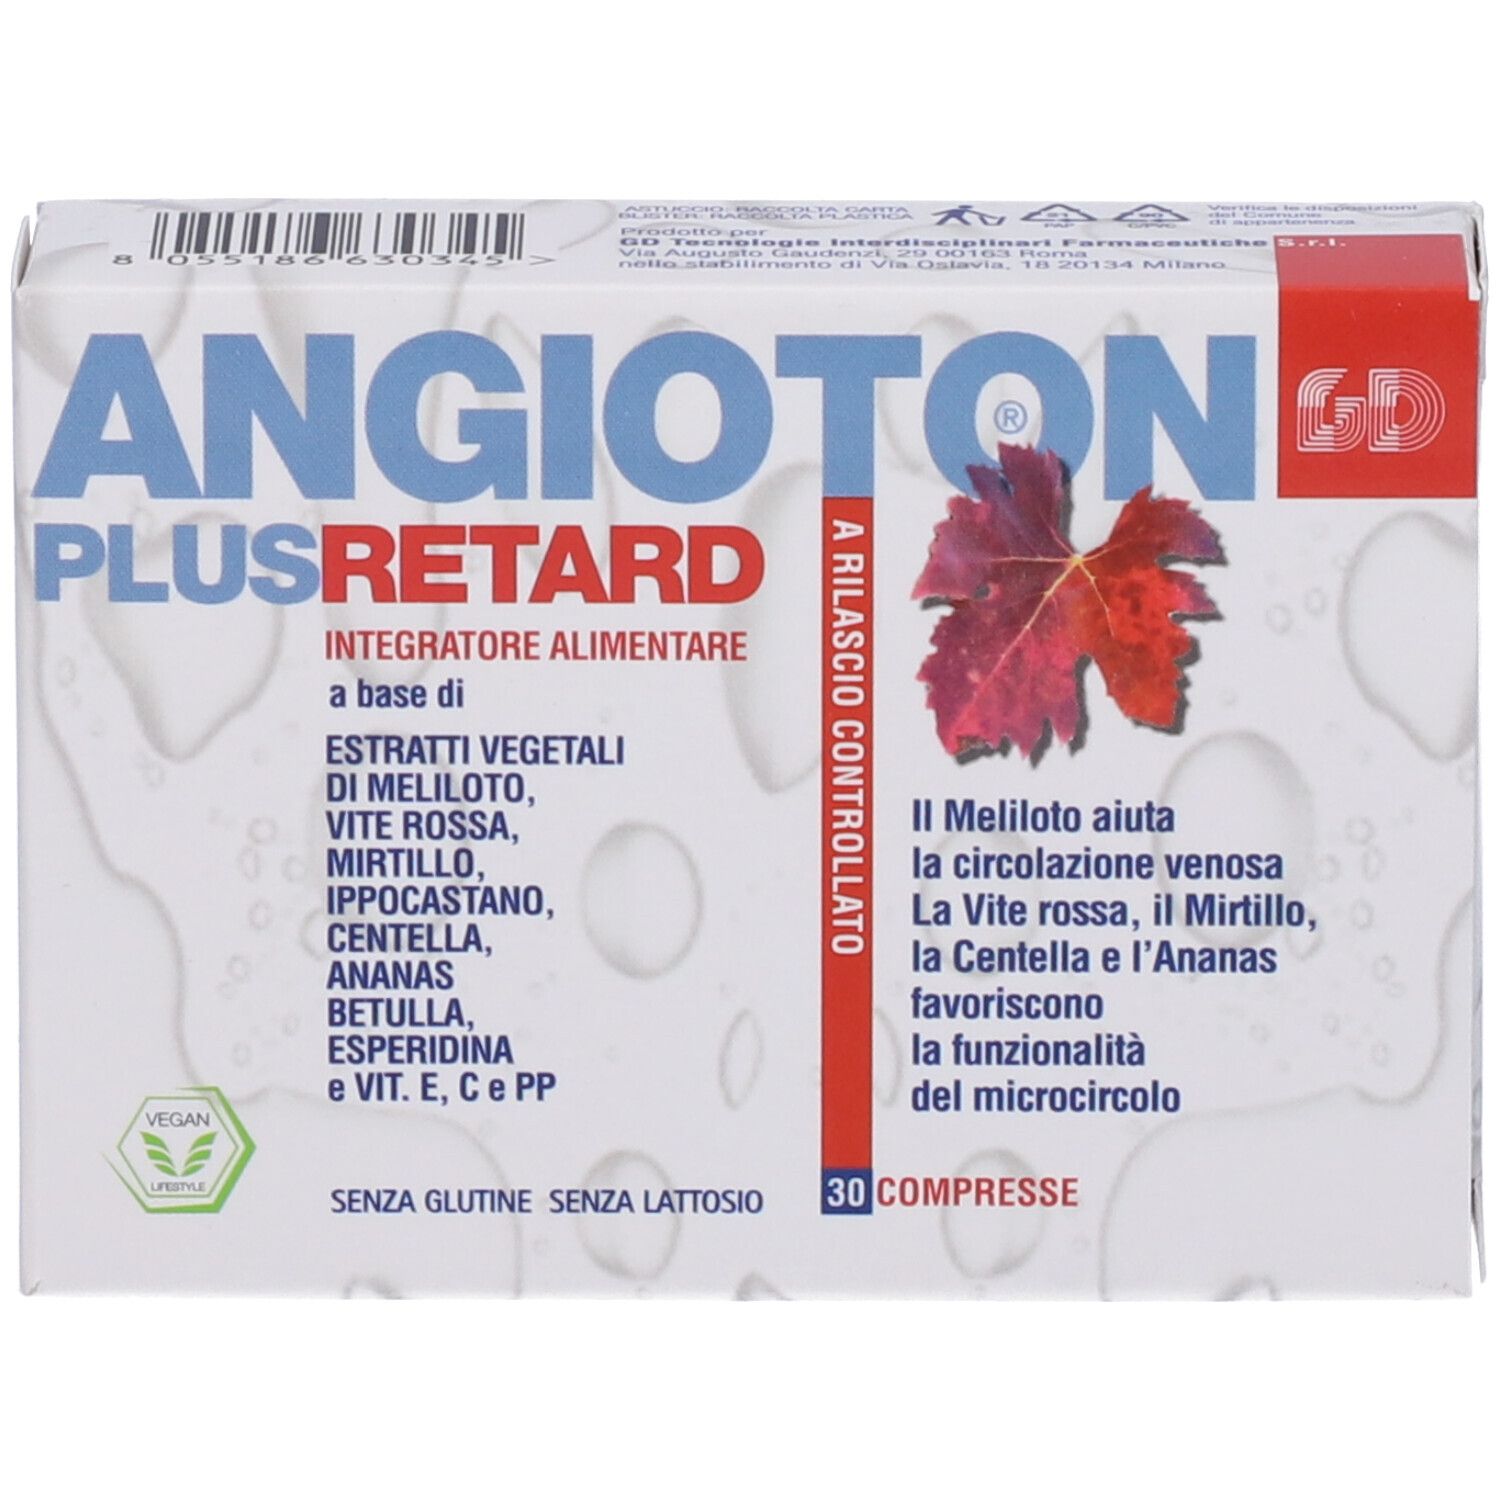 Angioton® Plus Retard